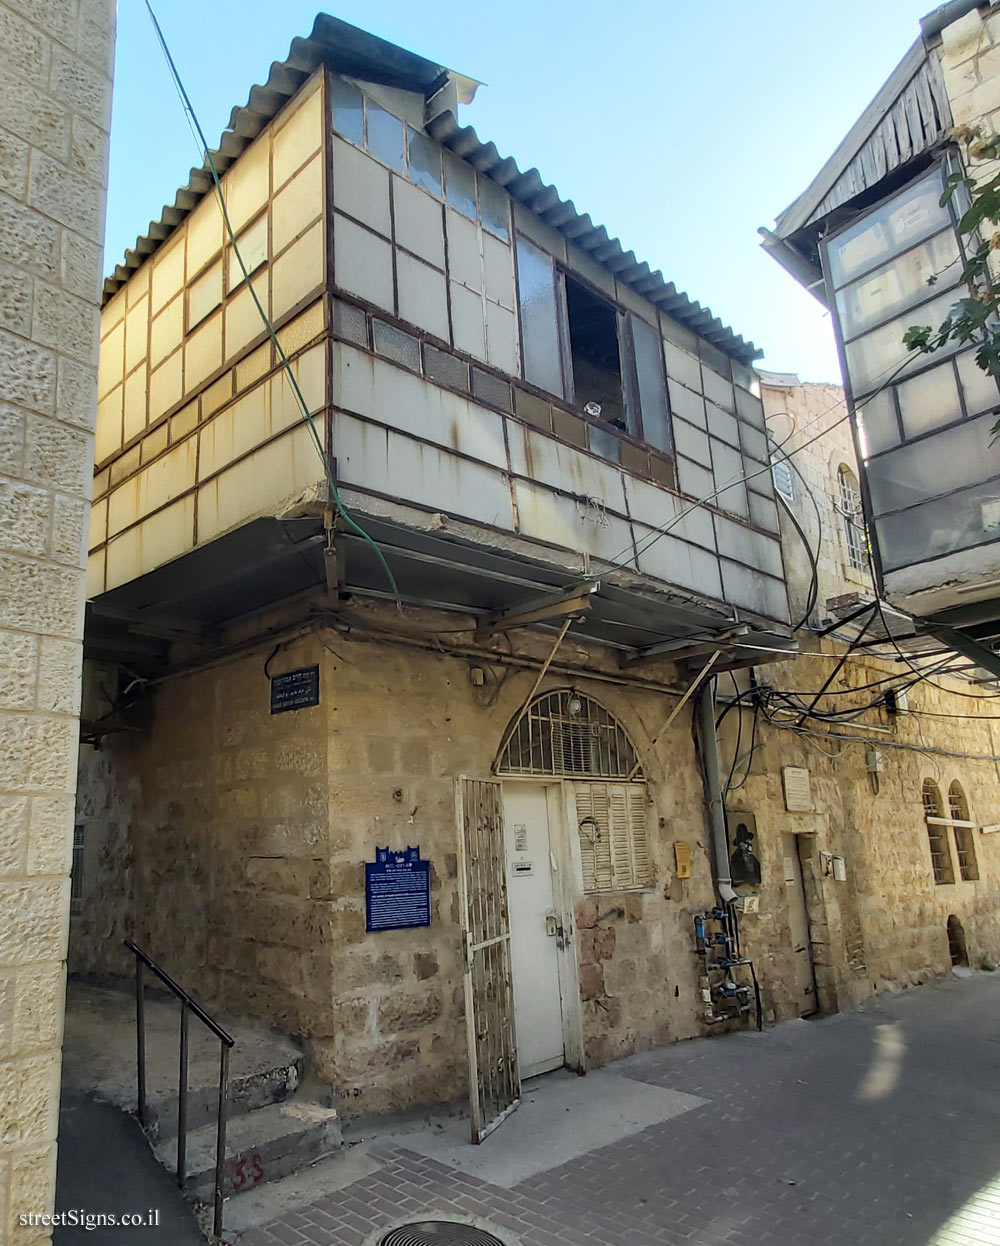 Jerusalem - Heritage Sites in Israel - The House of Rabbi Aryeh Levin - Rabbi Arye St 2, Jerusalem, Israel